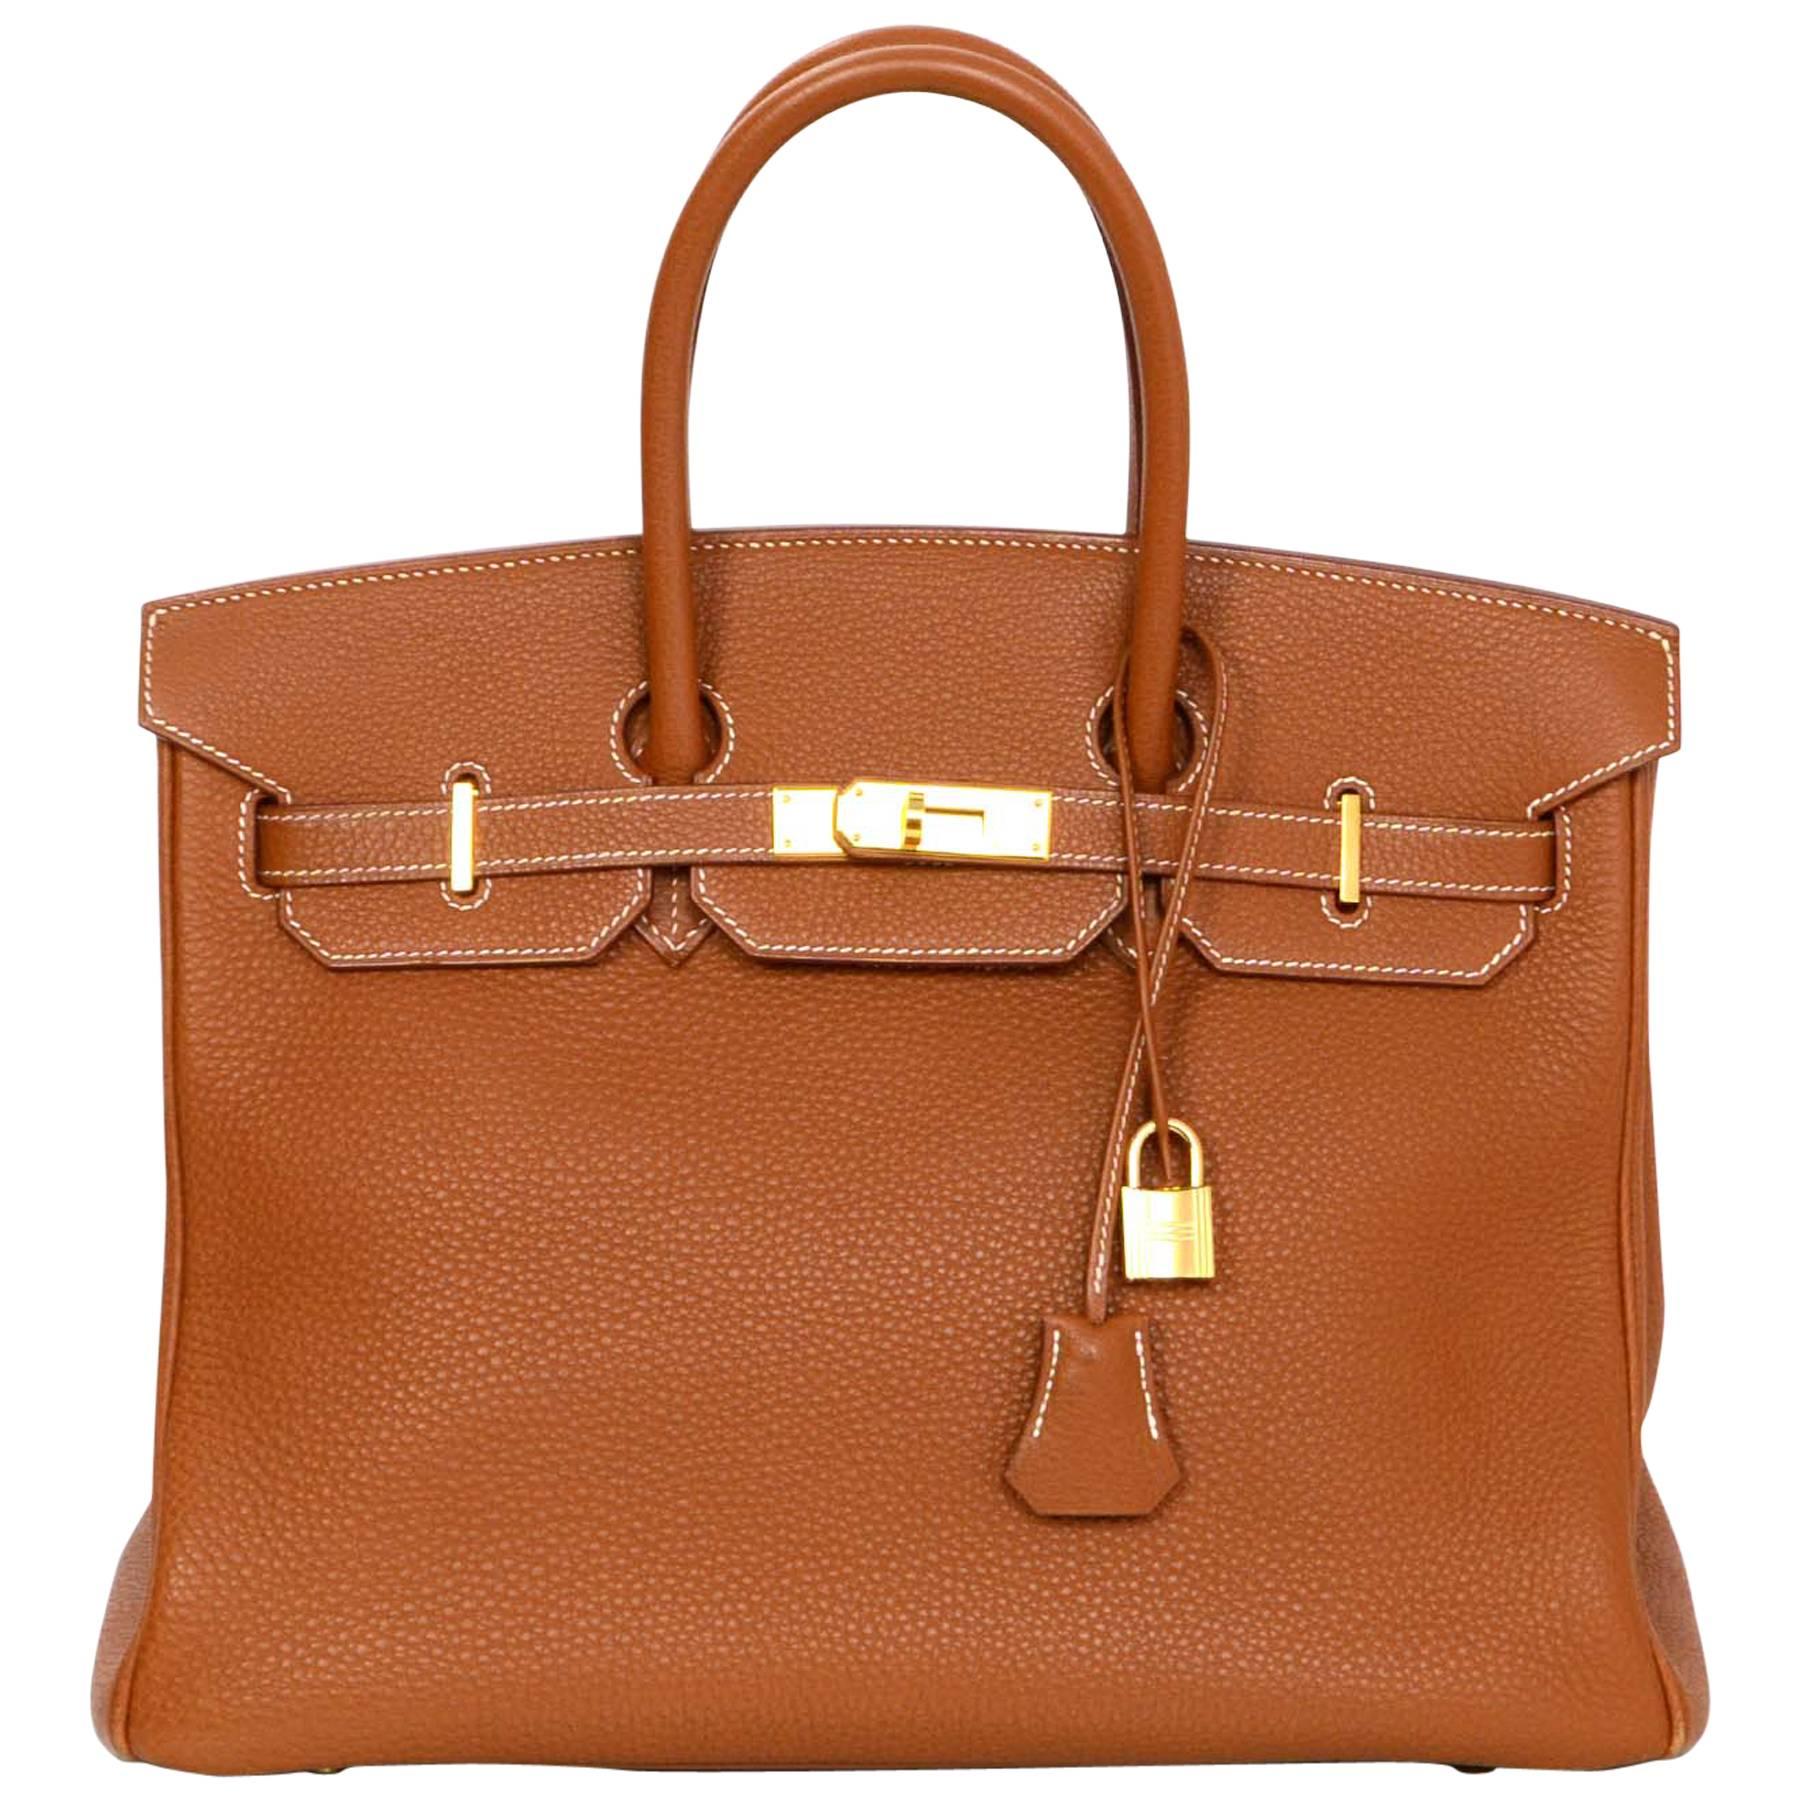 Hermes Gold/Tan Togo Leather 35cm Birkin Bag w/ Box & Dust Bag